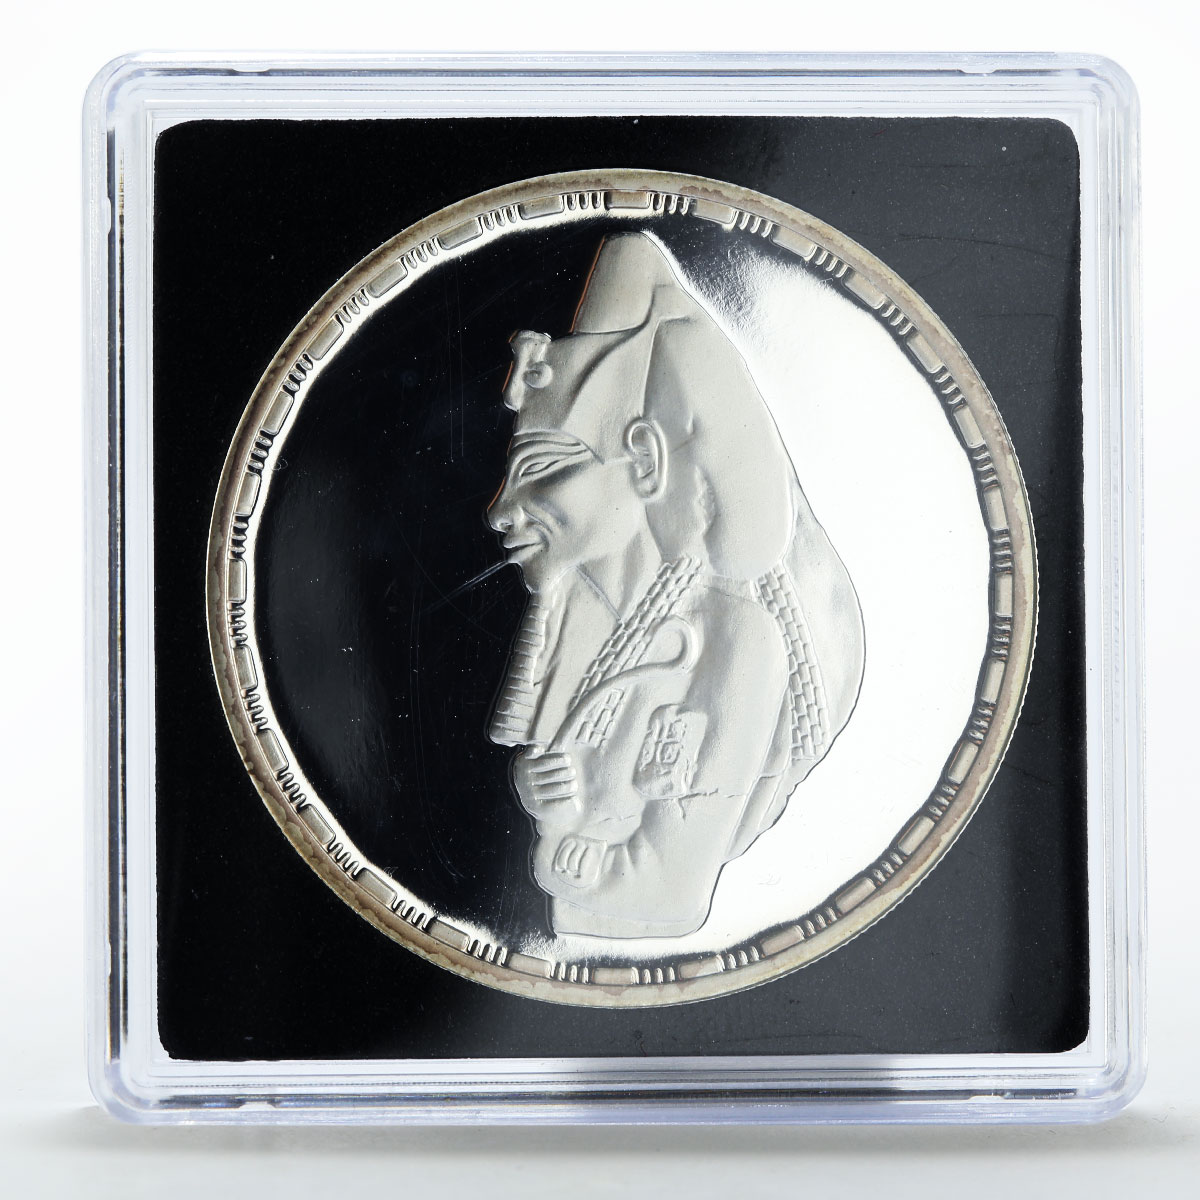 Egypt 5 pounds Akhnaton proof silver coin 1994